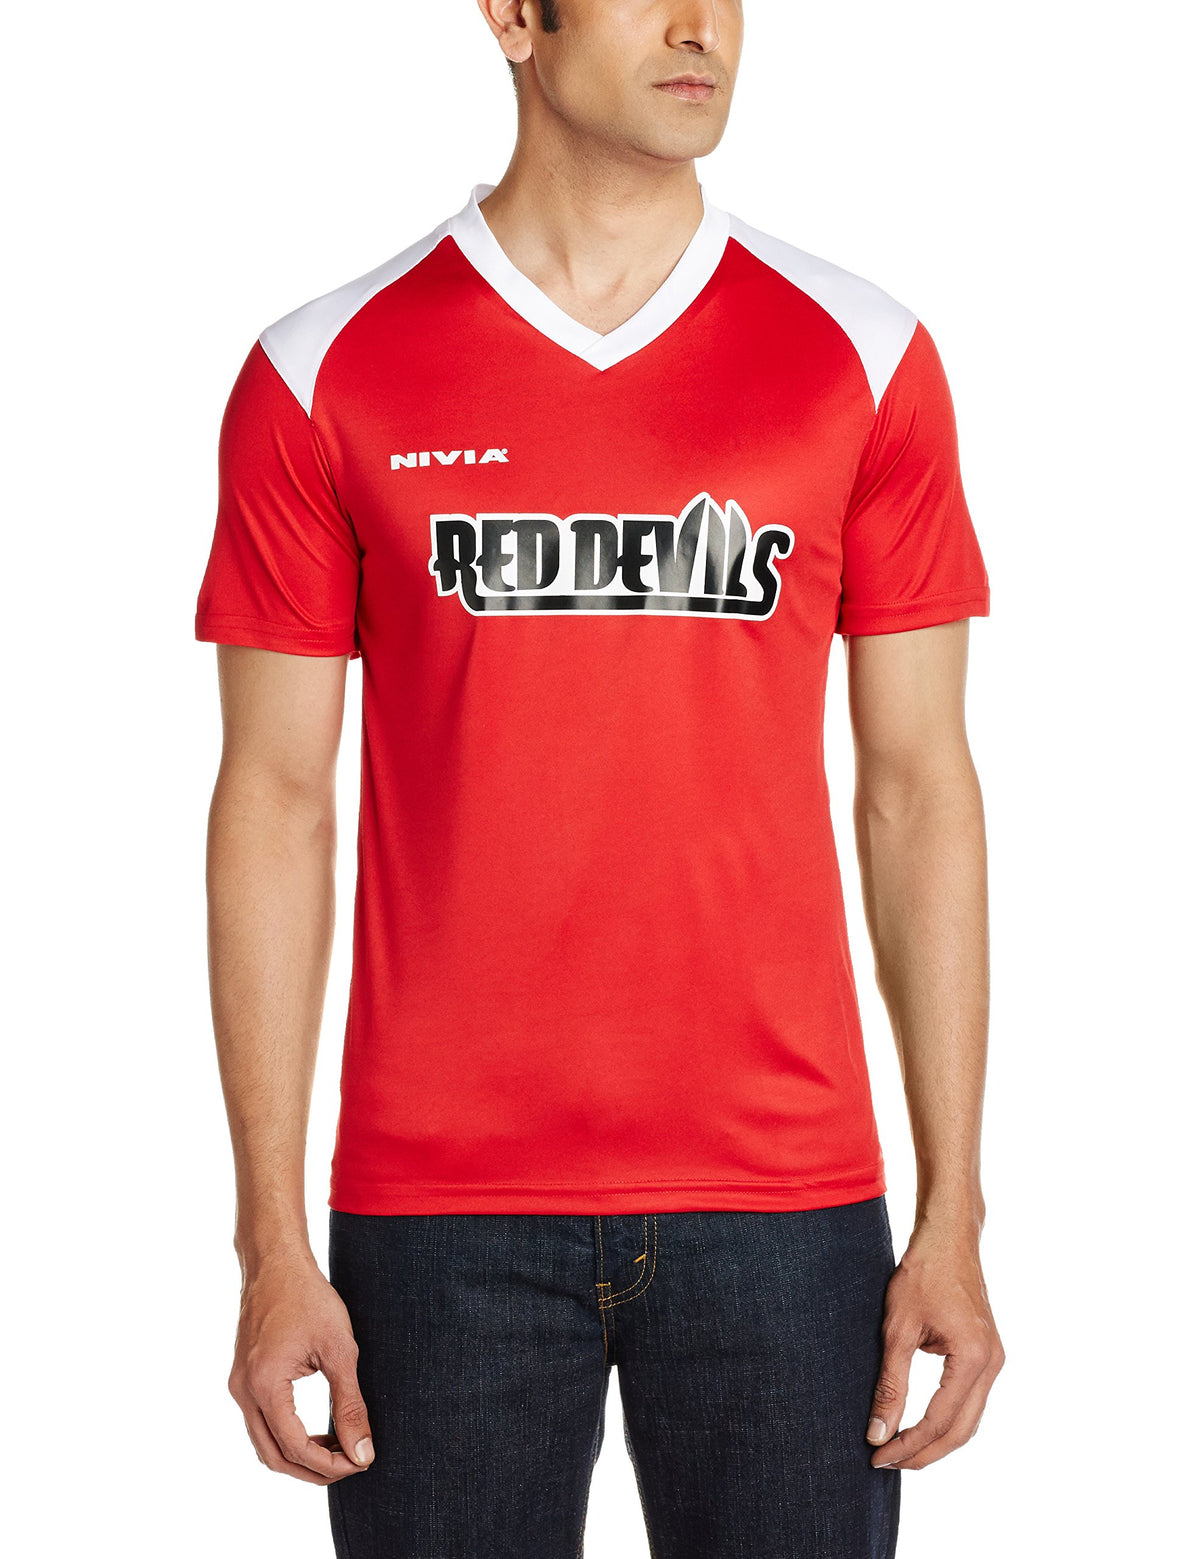 Nivia Red Devils Club T-Shirt, Small (Red/White)